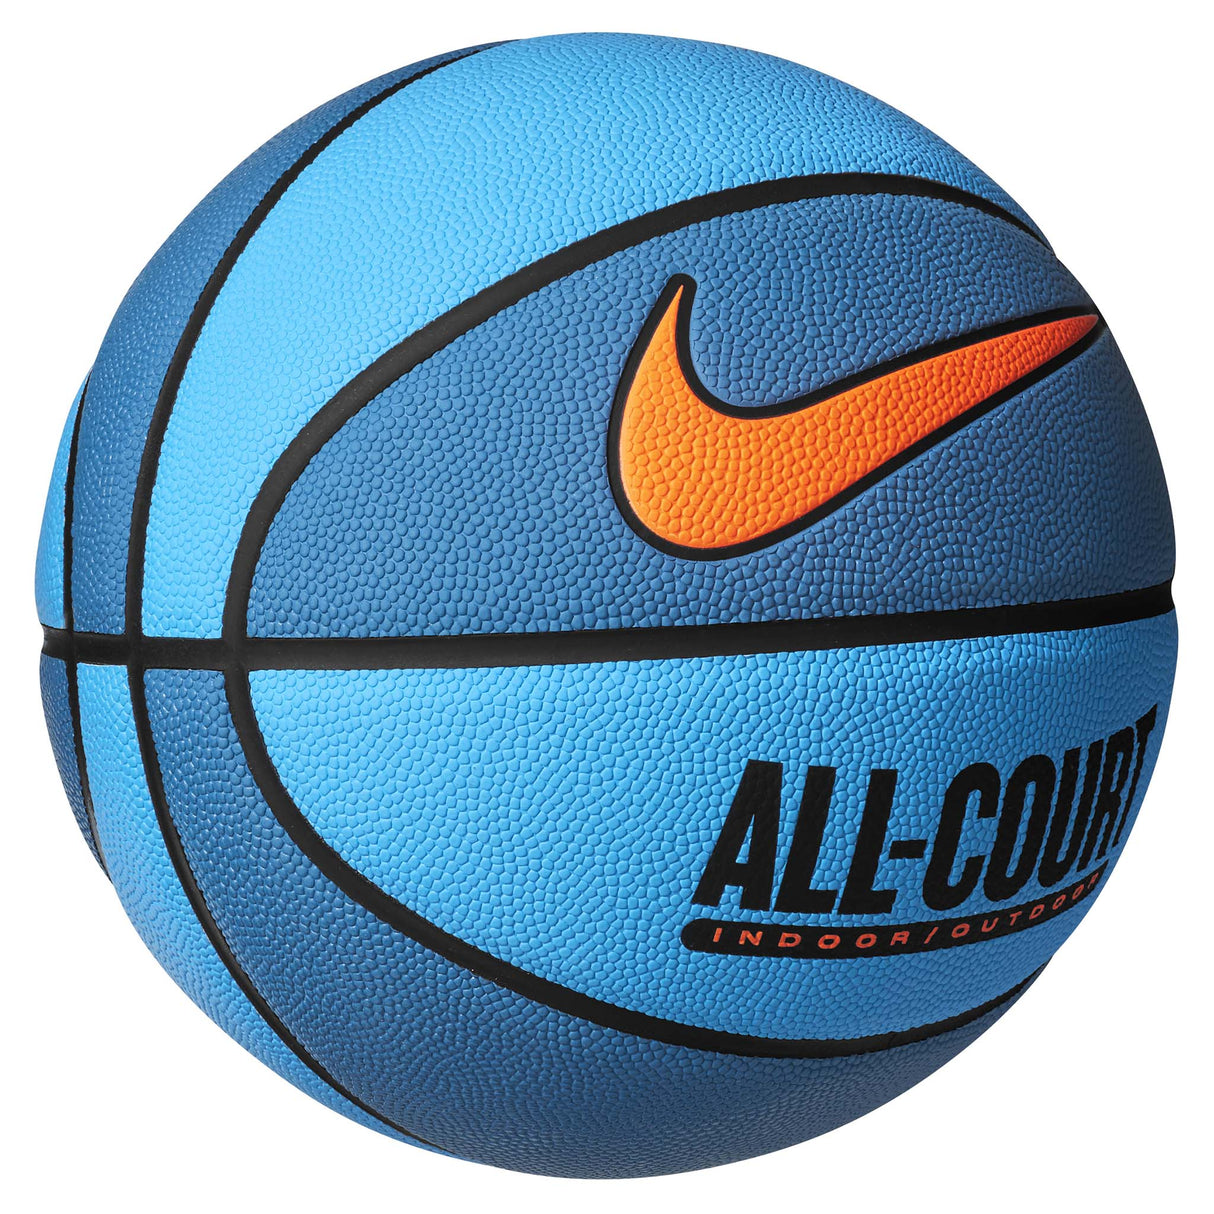 Nike Everyday All Court 8P ballon de basketball Marina / Black / Black / Rush orange -2